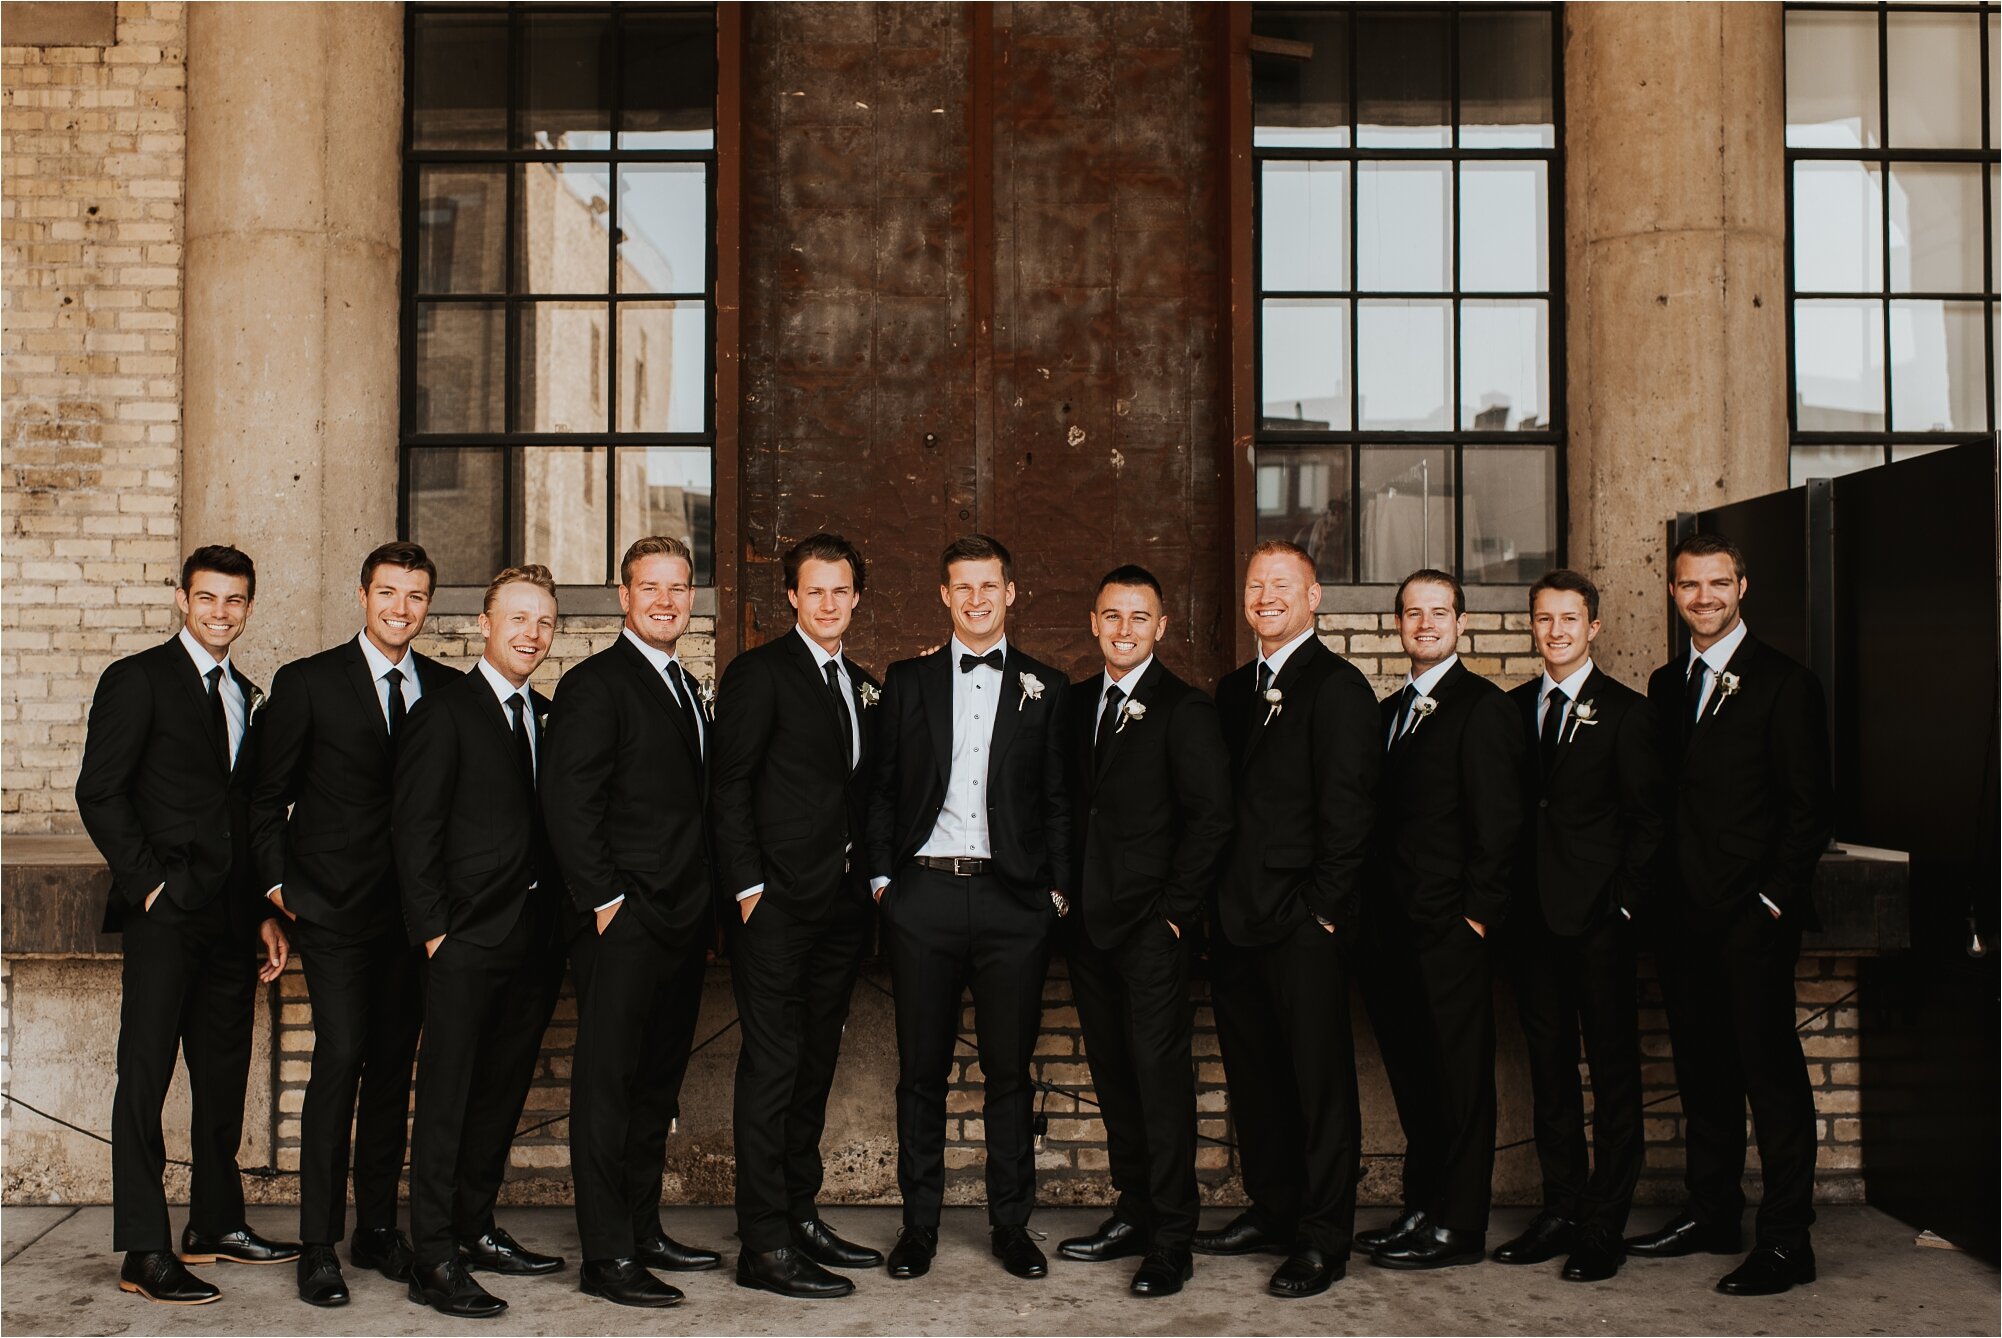  wedding party groomsmen groomsman groom guys boys men wedding tux suit minnesota weding photographer ali leigh 